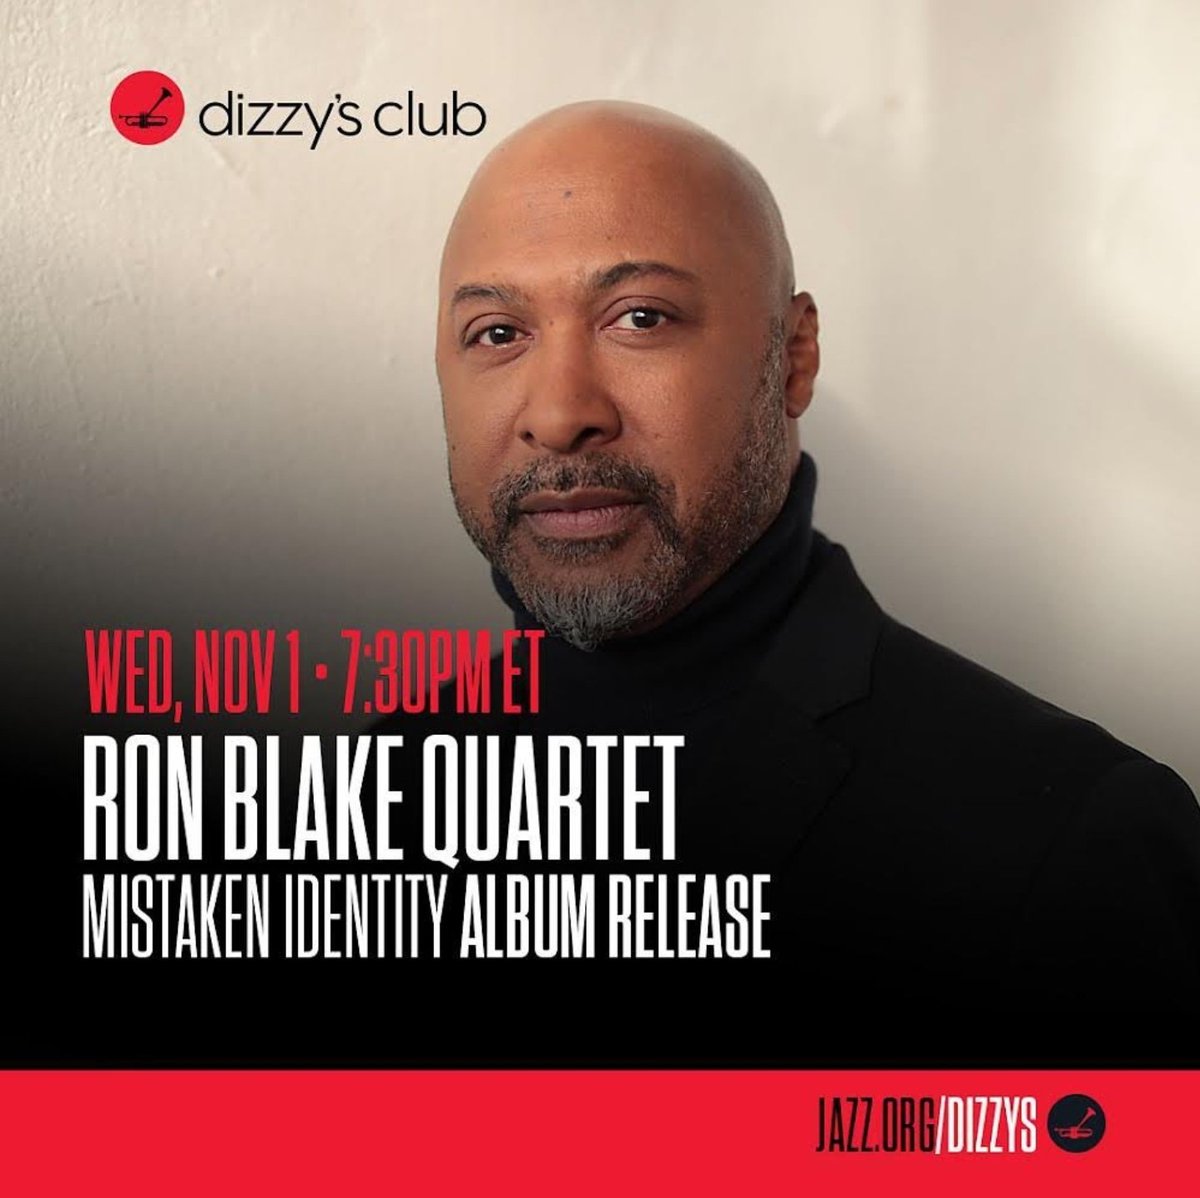 #SupportTheScene
Saxophonist @RonBlakeMusic 

#NewRelease #MistakenIdentity
#LiveMusic #NYC #DizzysClub